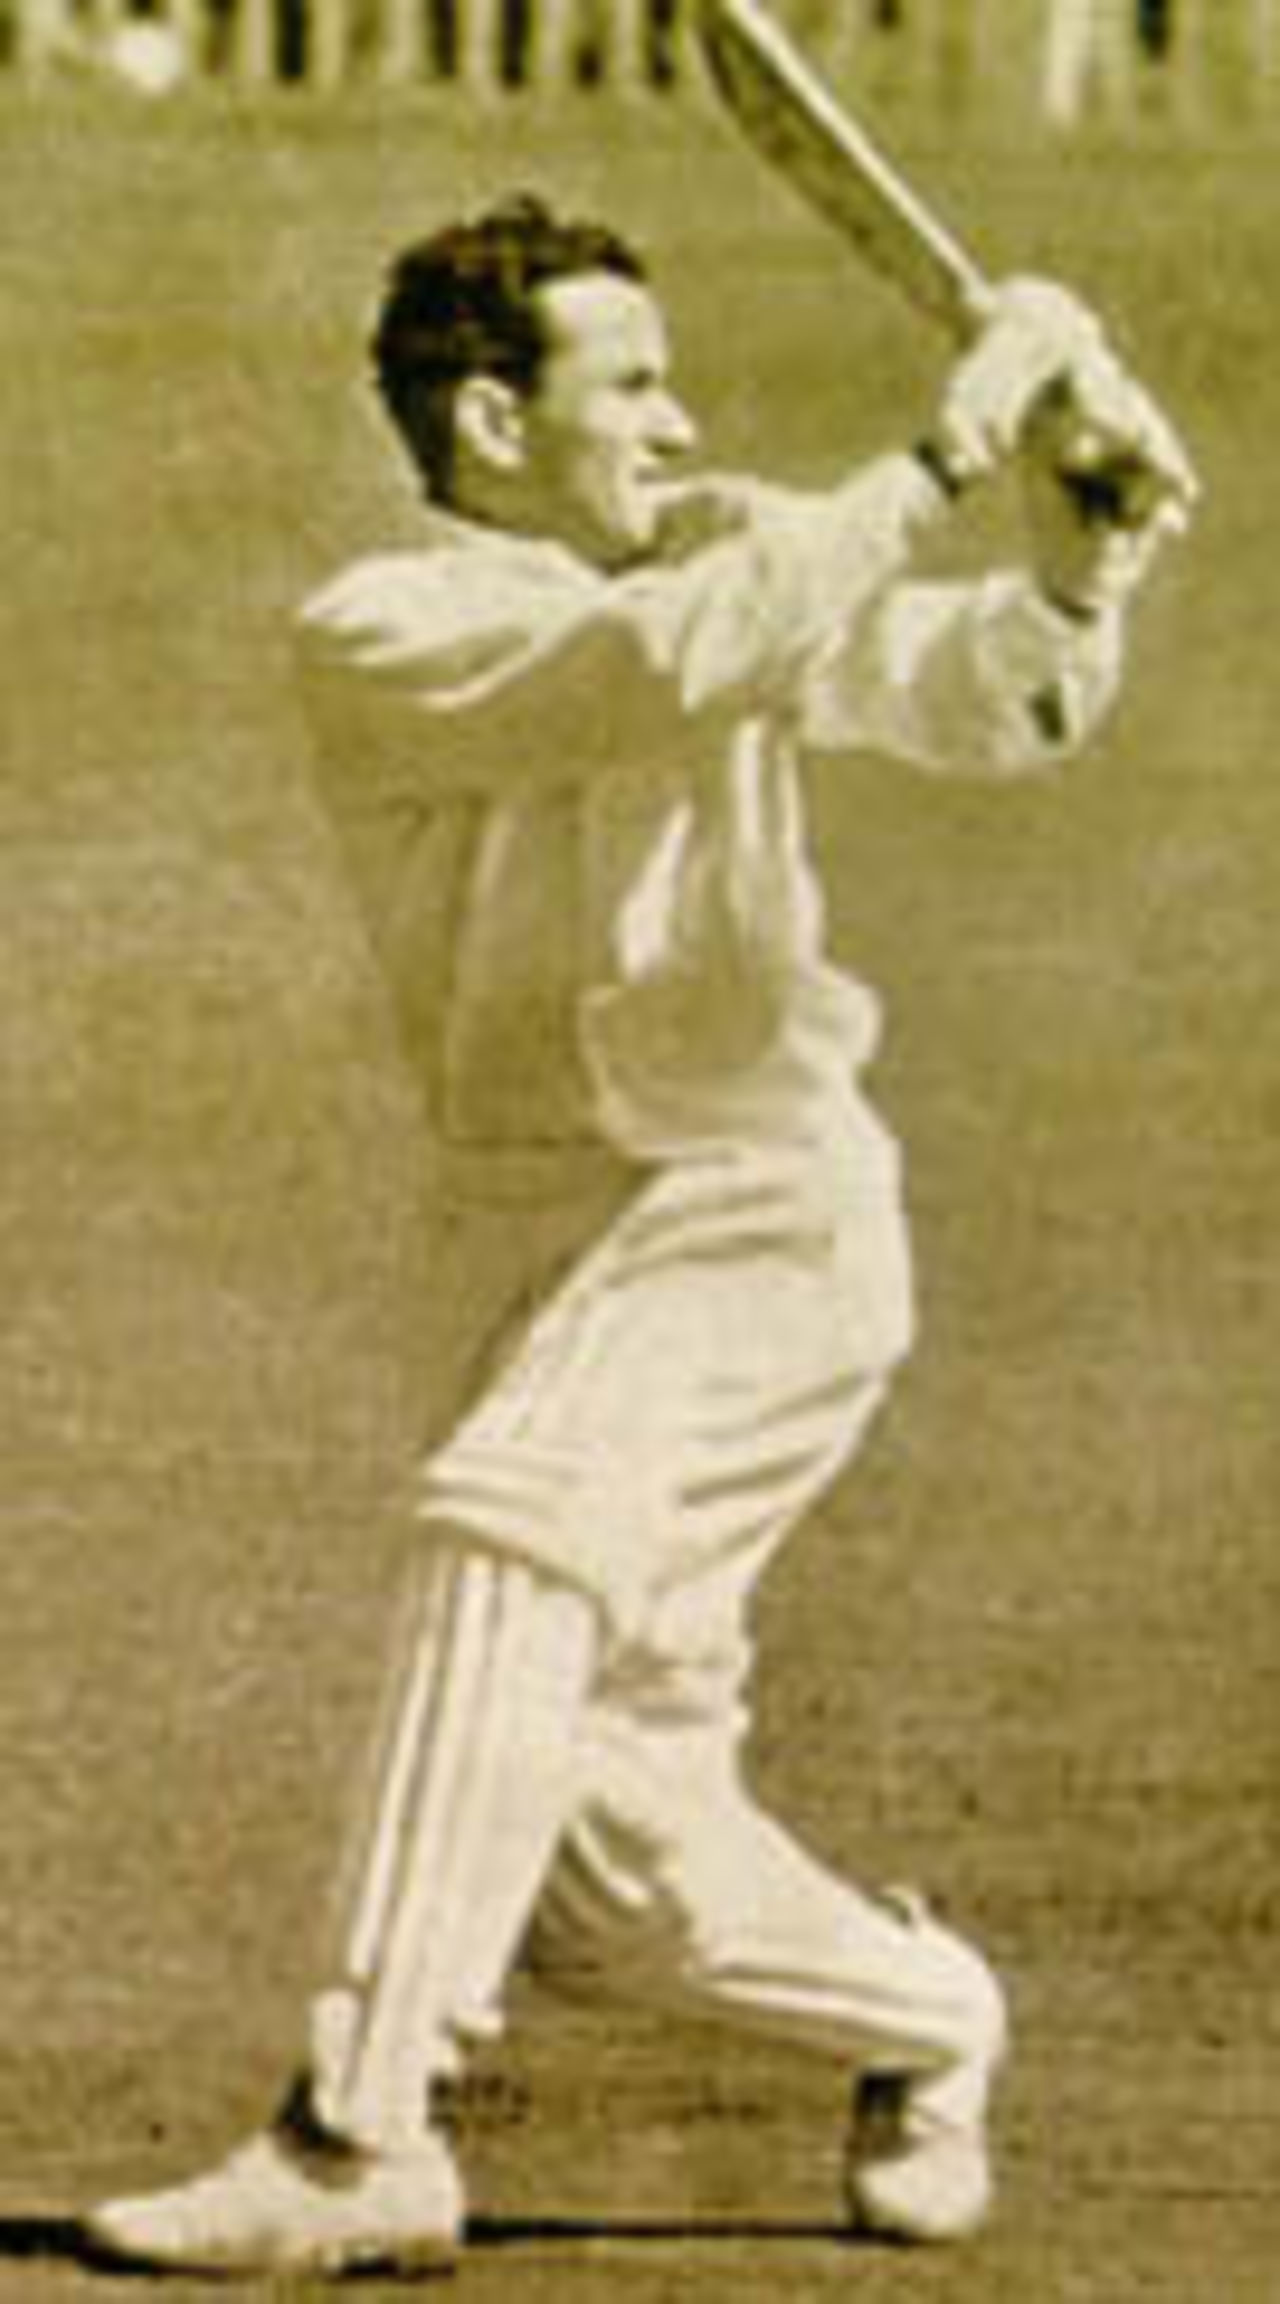 Maqsood Ahmed a former Pakistan stylish test batsman